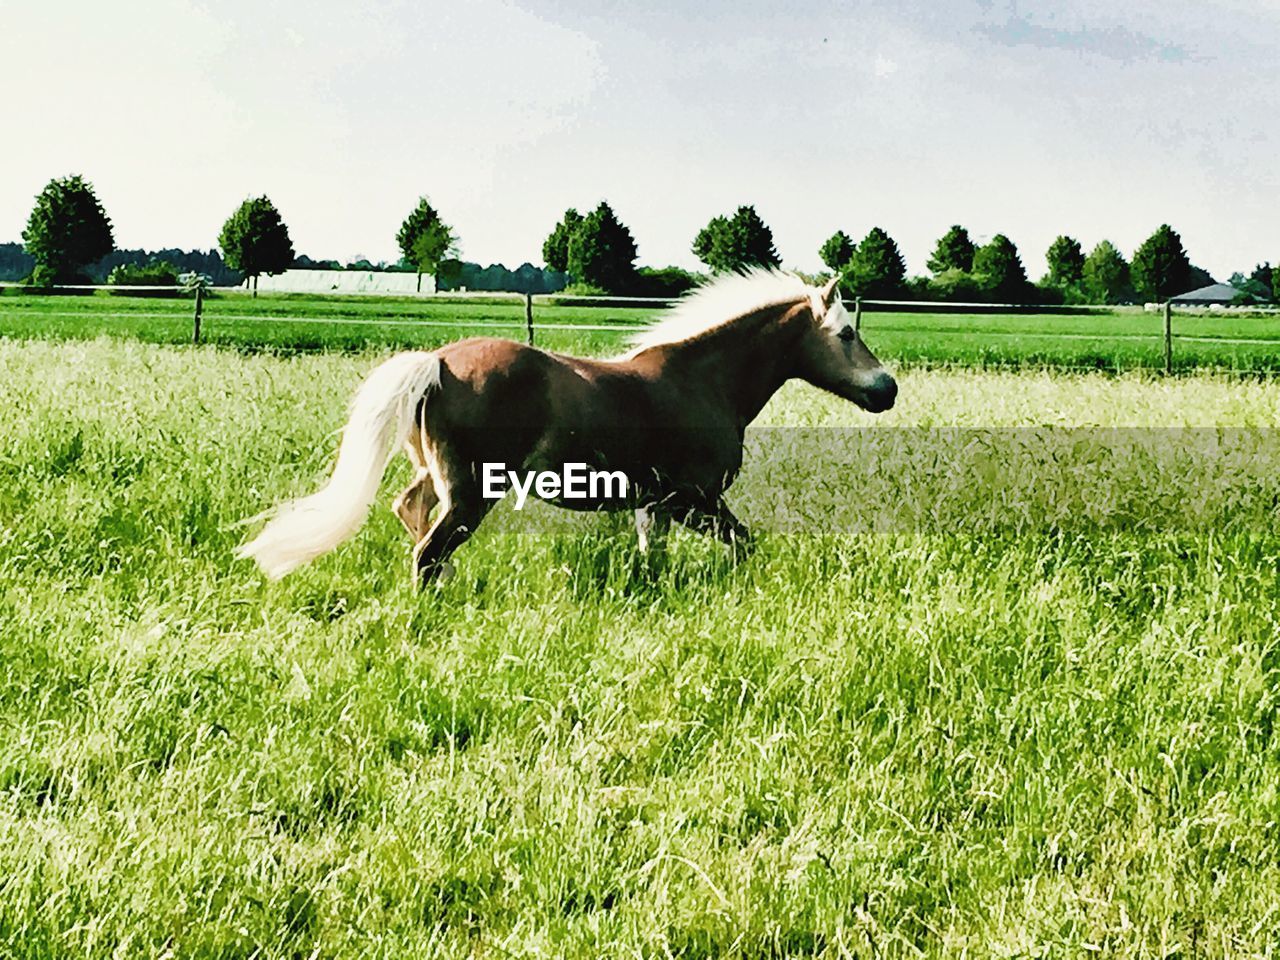 HORSES ON GRASS